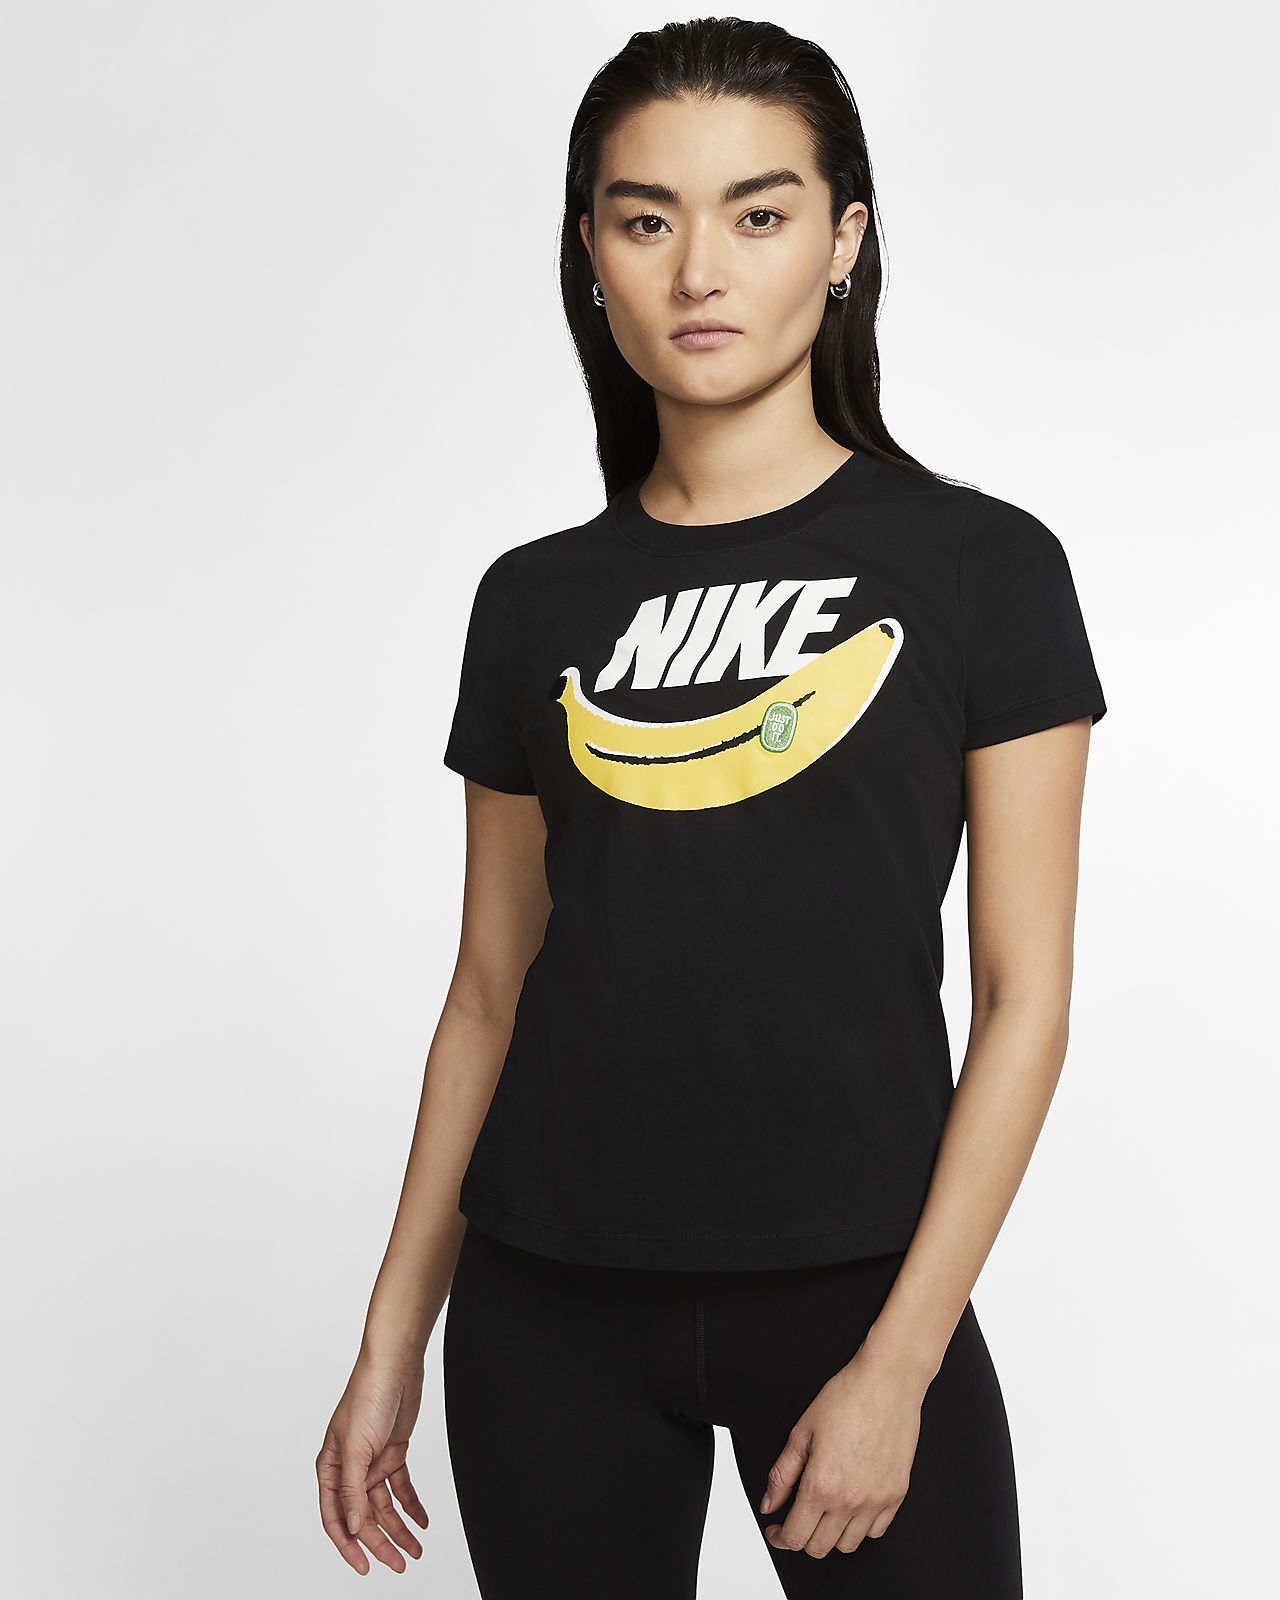 Nike Sportswear Women S Printed T Shirt Nike Com